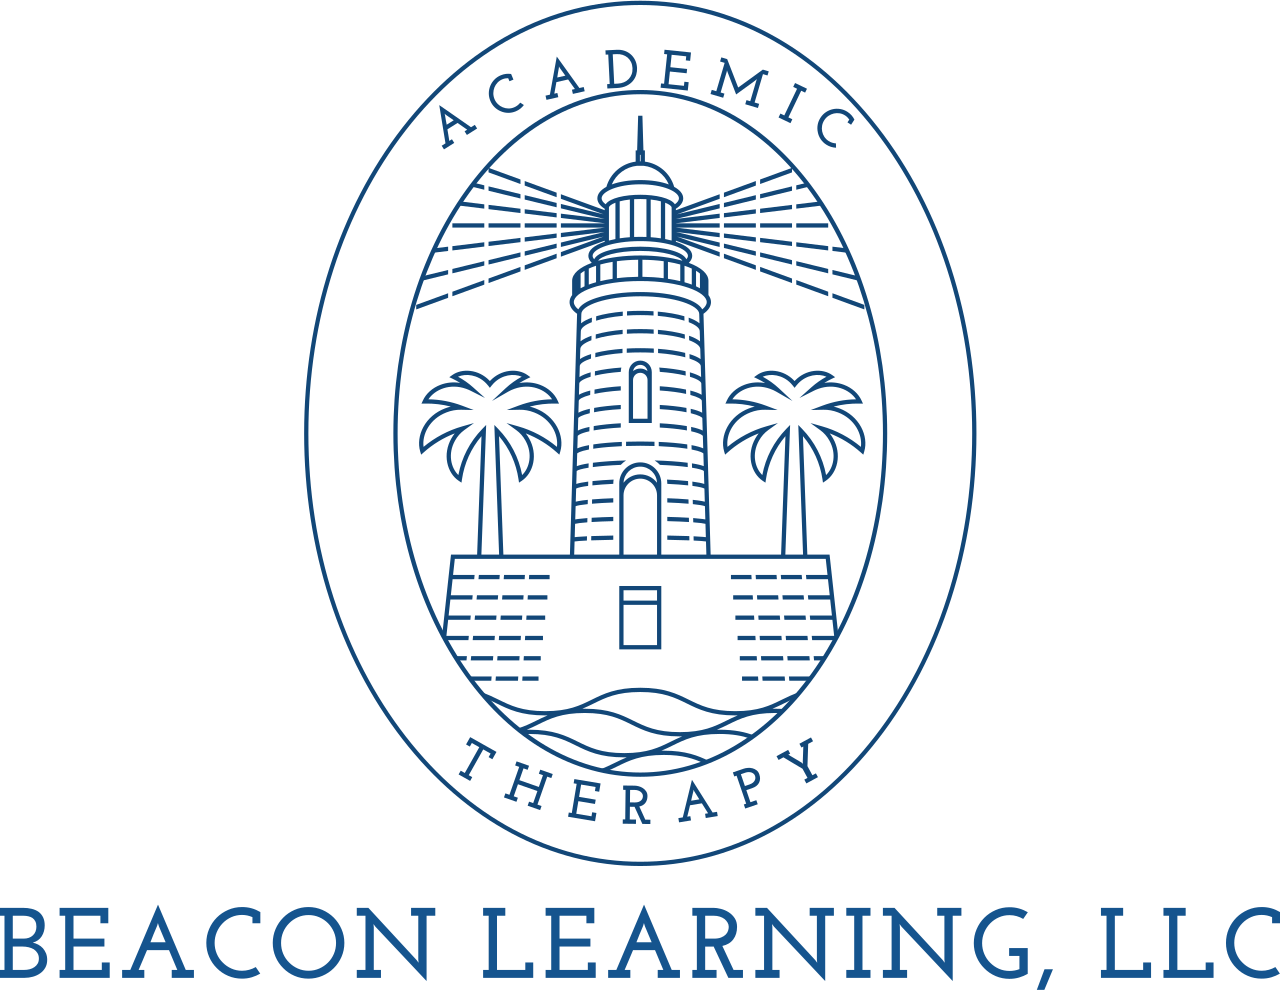 (c) Beacon-learning.info